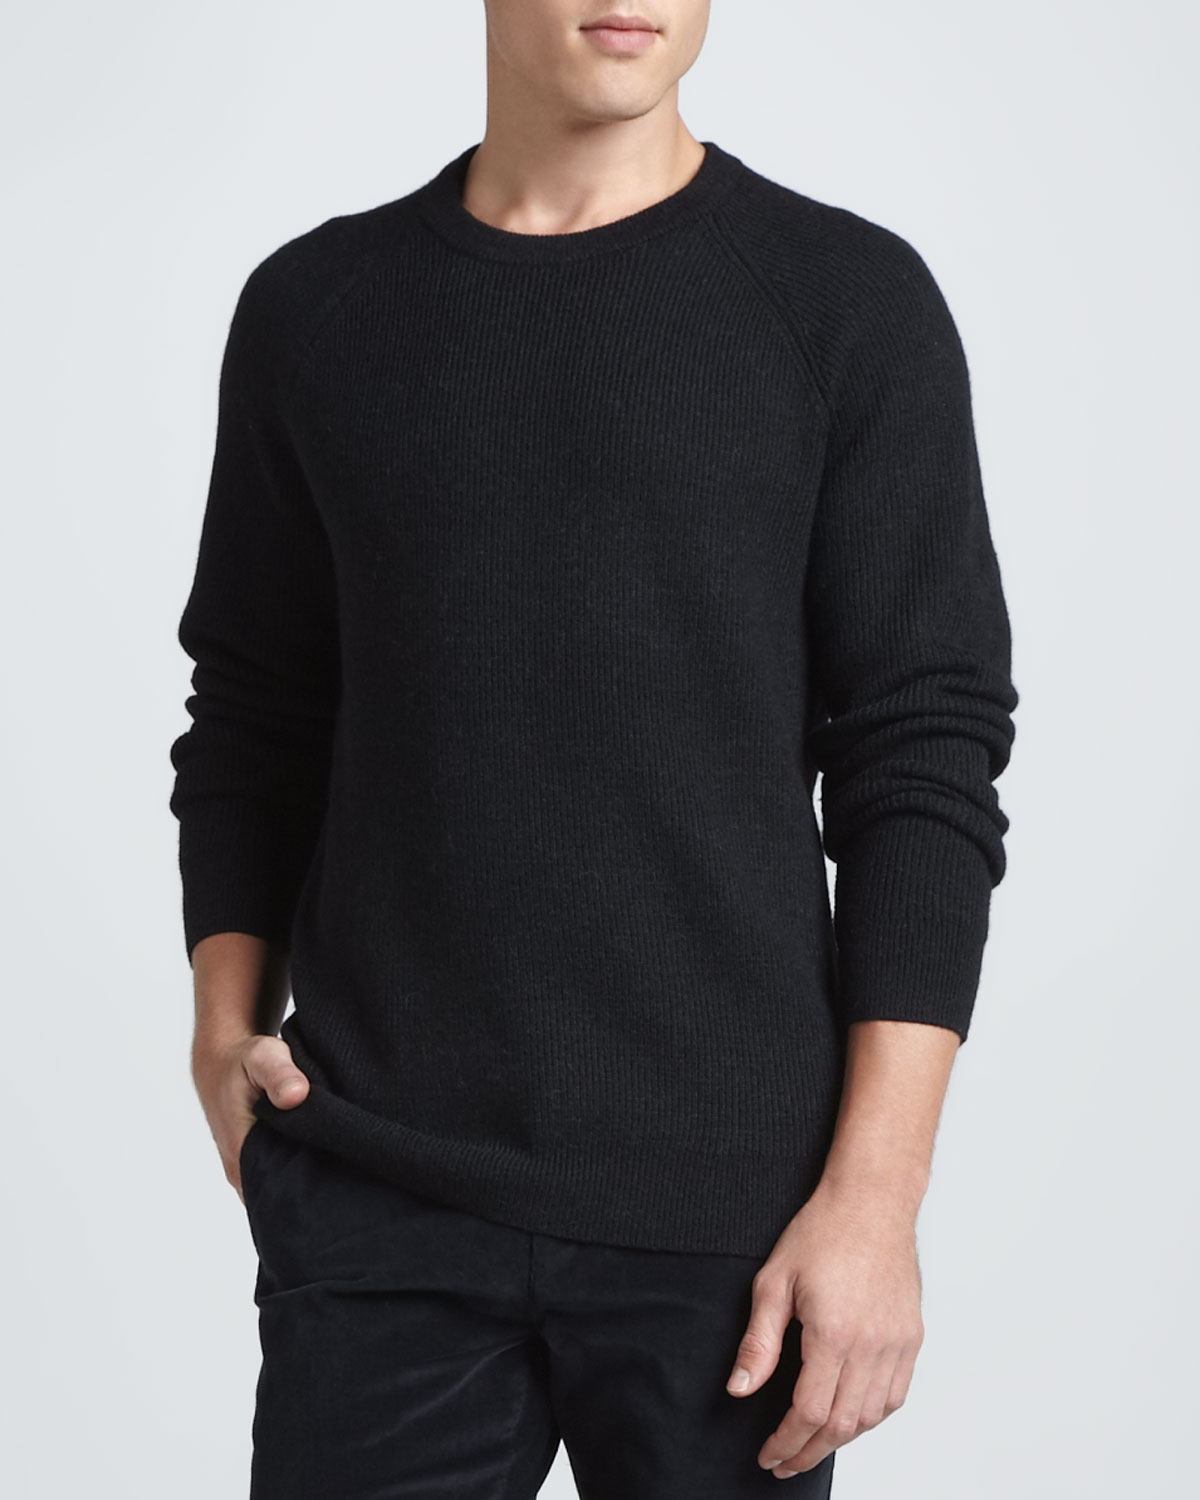 Lyst - Theory Eston Cd Sweater Black in Black for Men